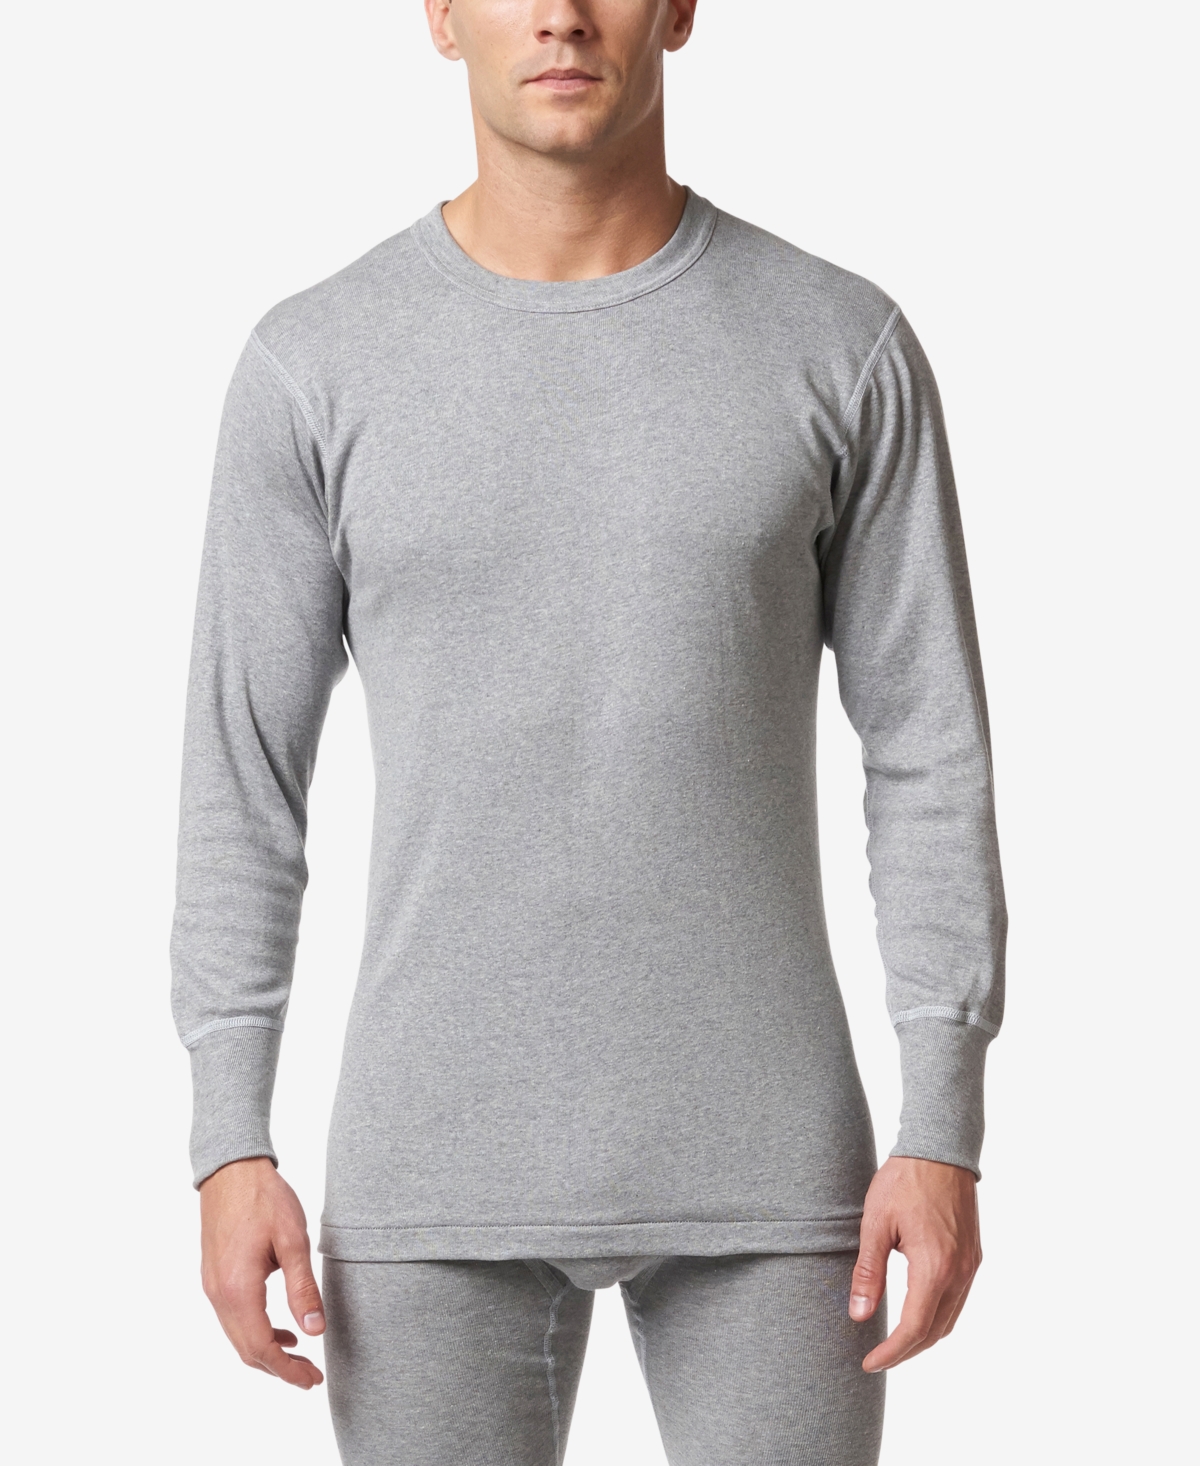 Men's Premium Cotton Rib Thermal Long Sleeve Undershirt - Gray Heather